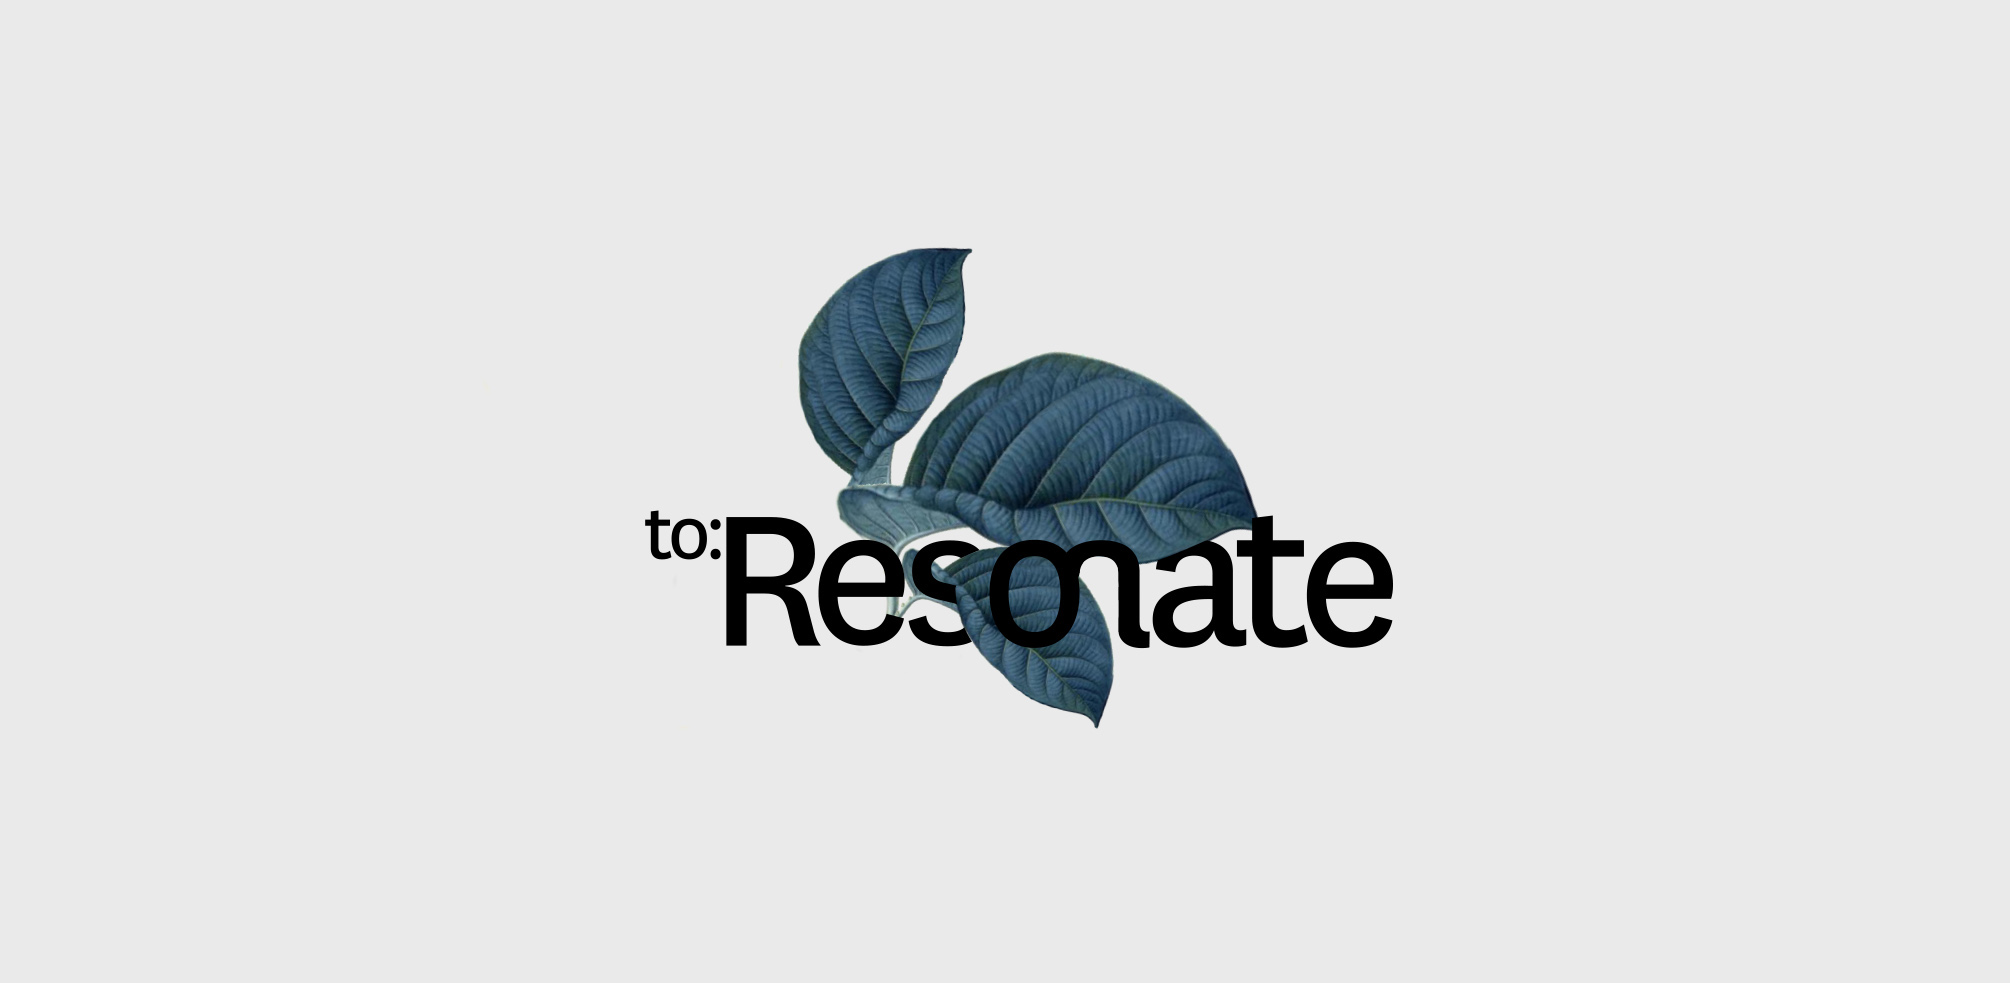 11Logo Design to:Resonate